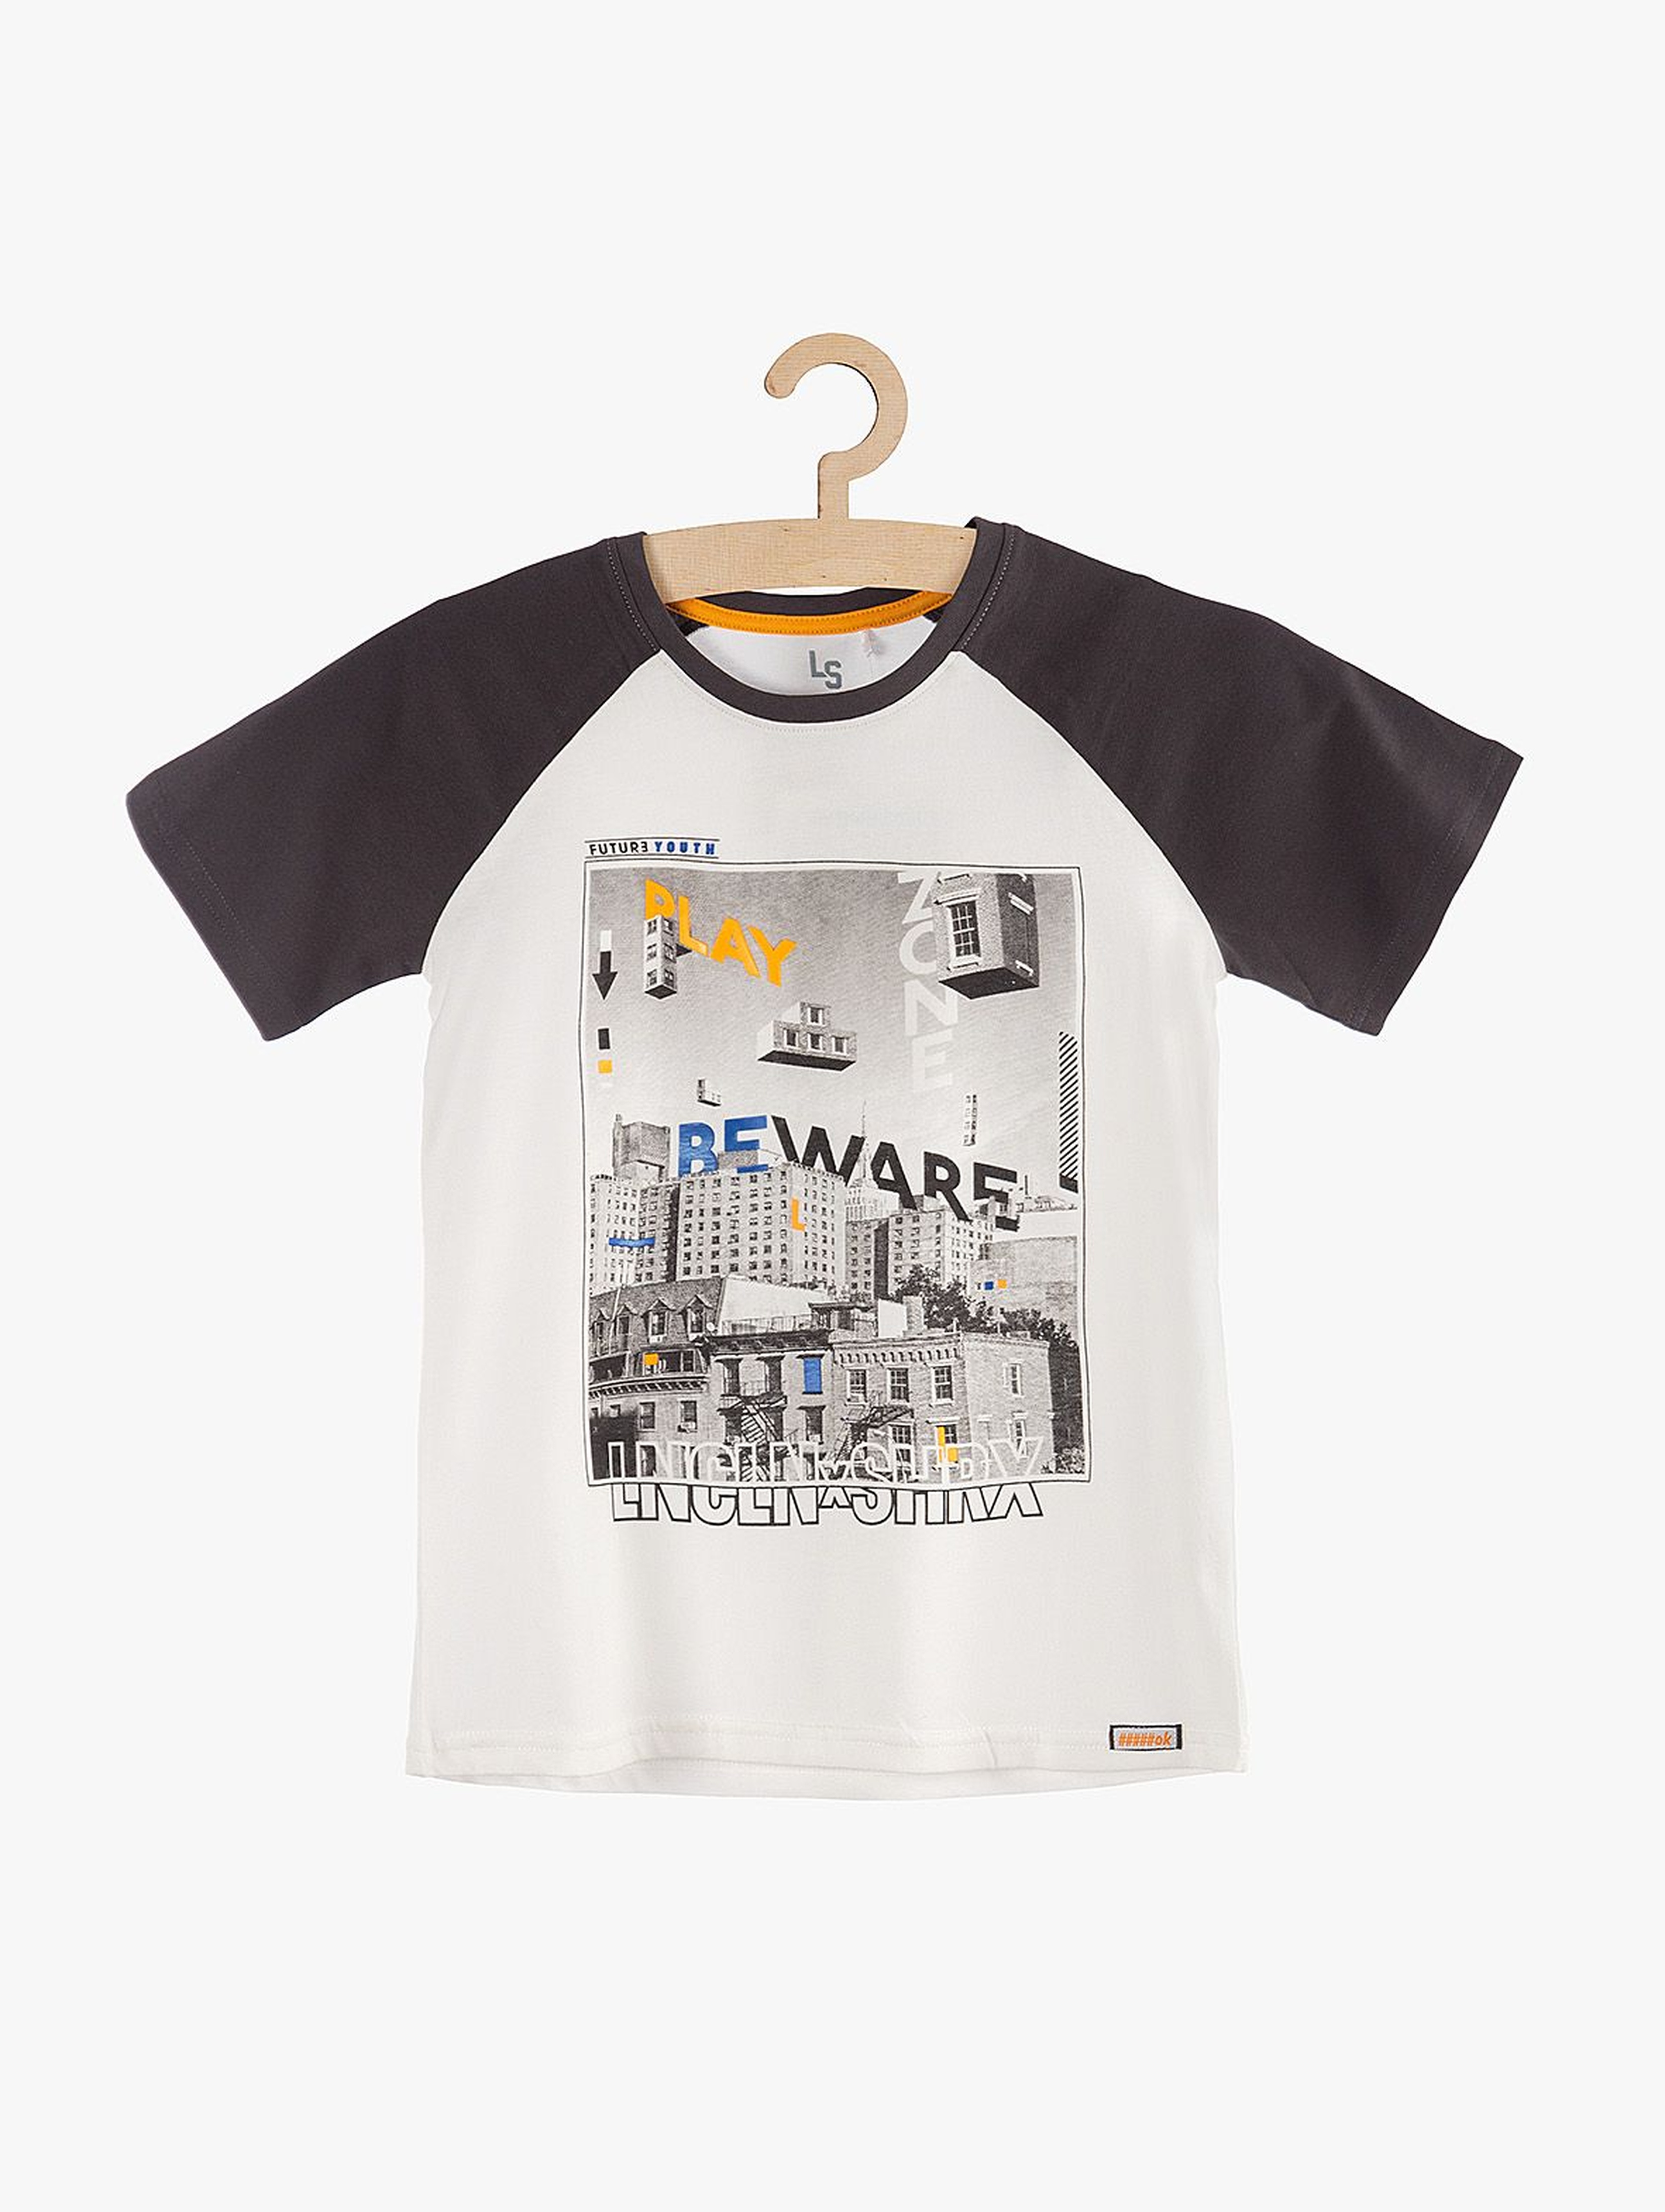 T-shirt chłopięcy Code Create- 100% bawełna